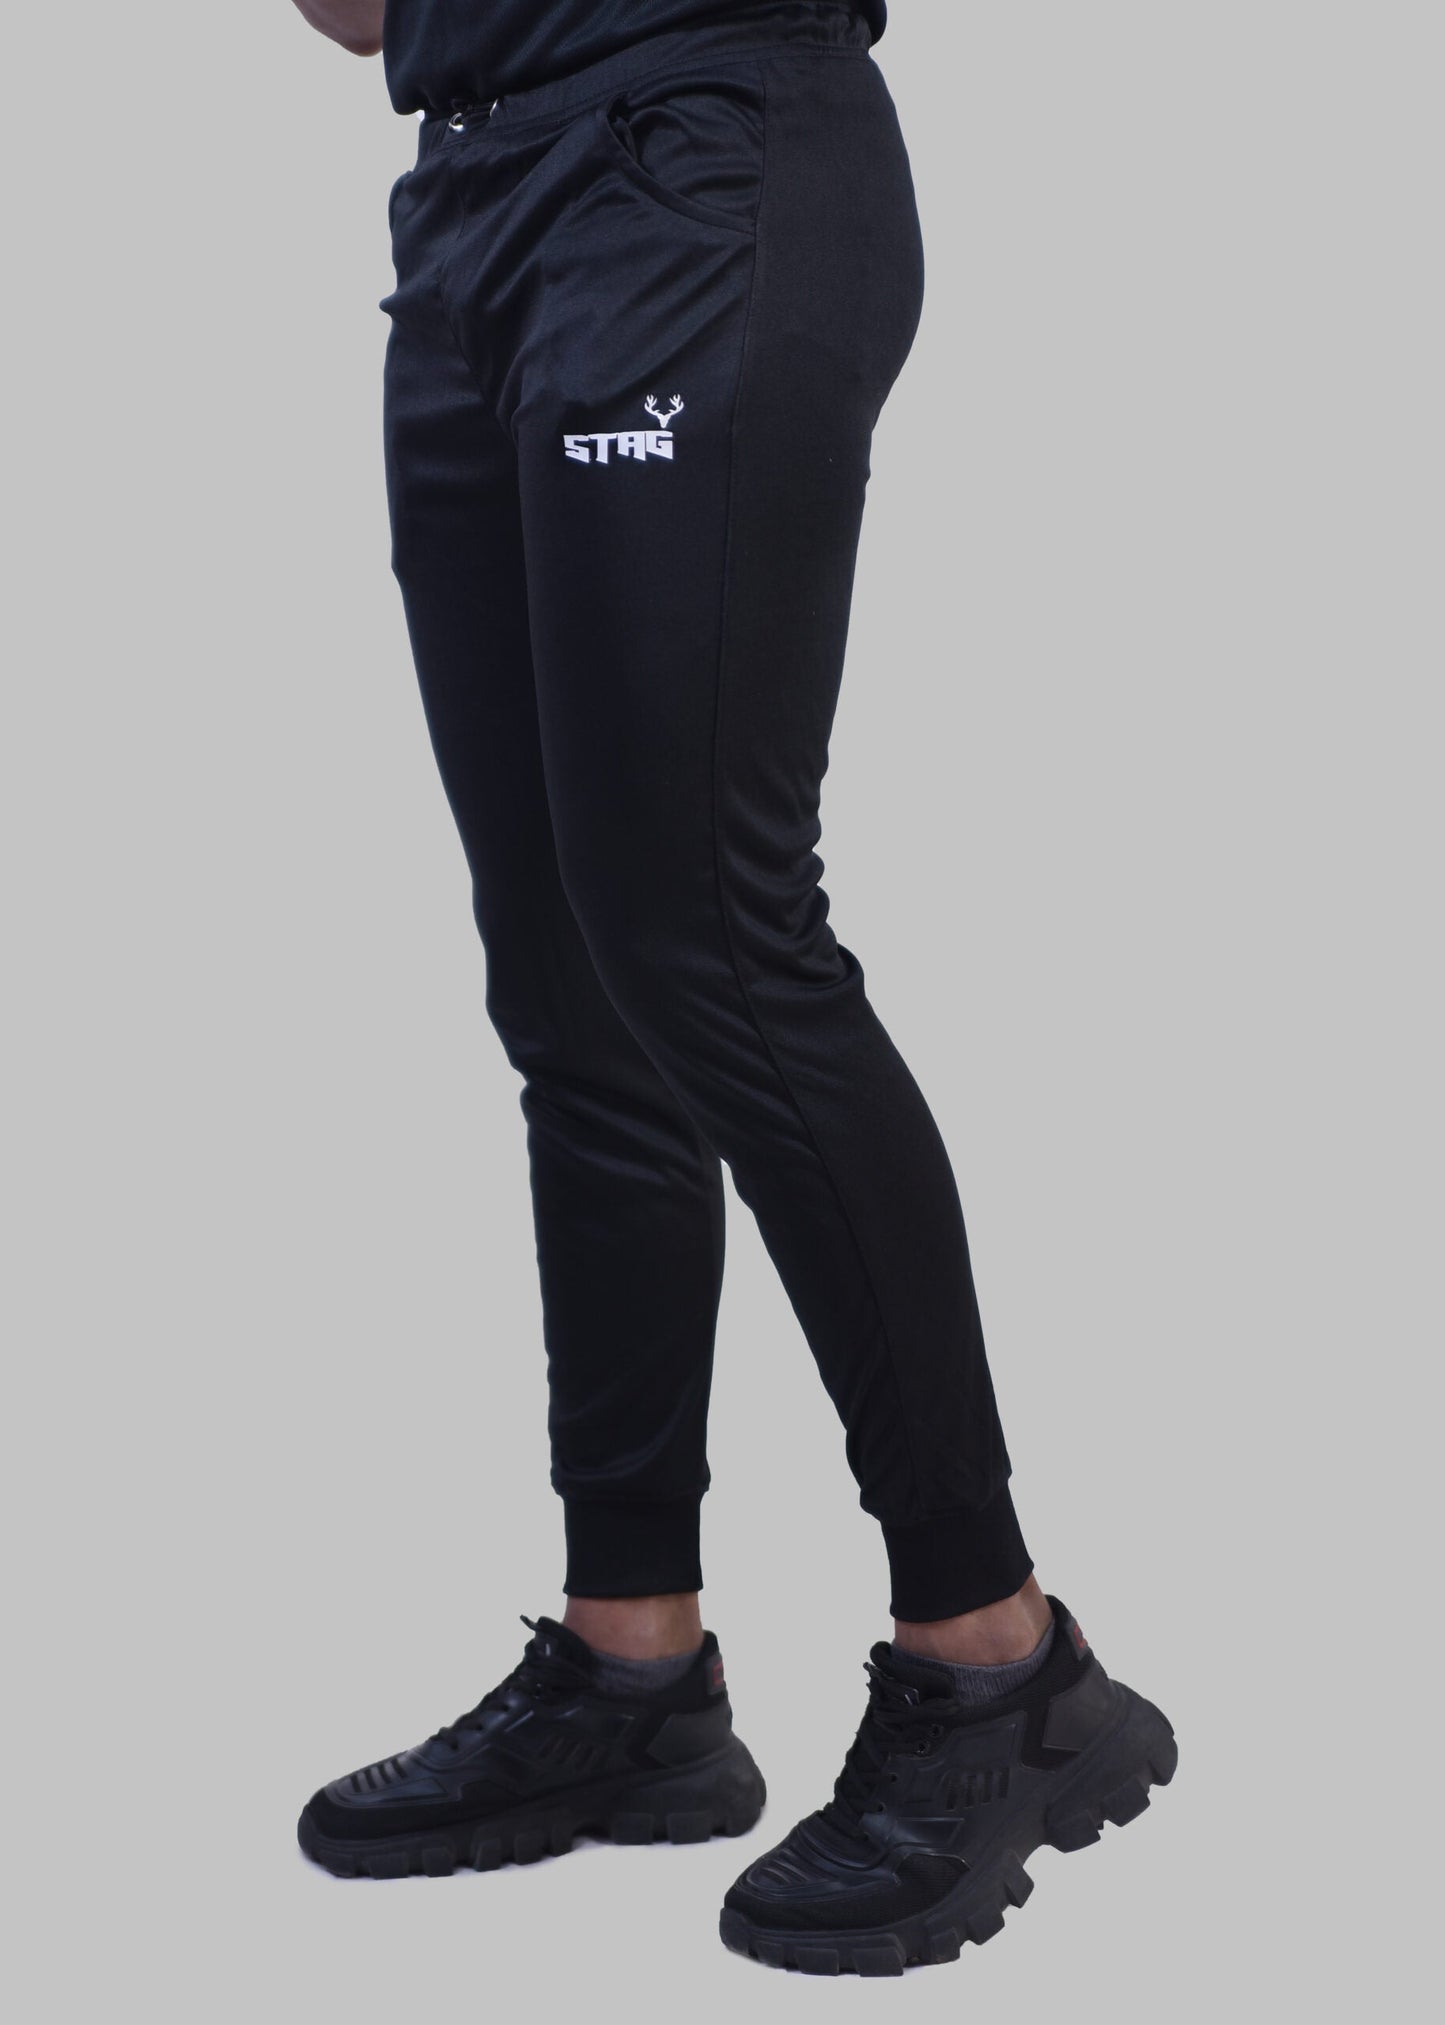 Apex Track Pants (Black)